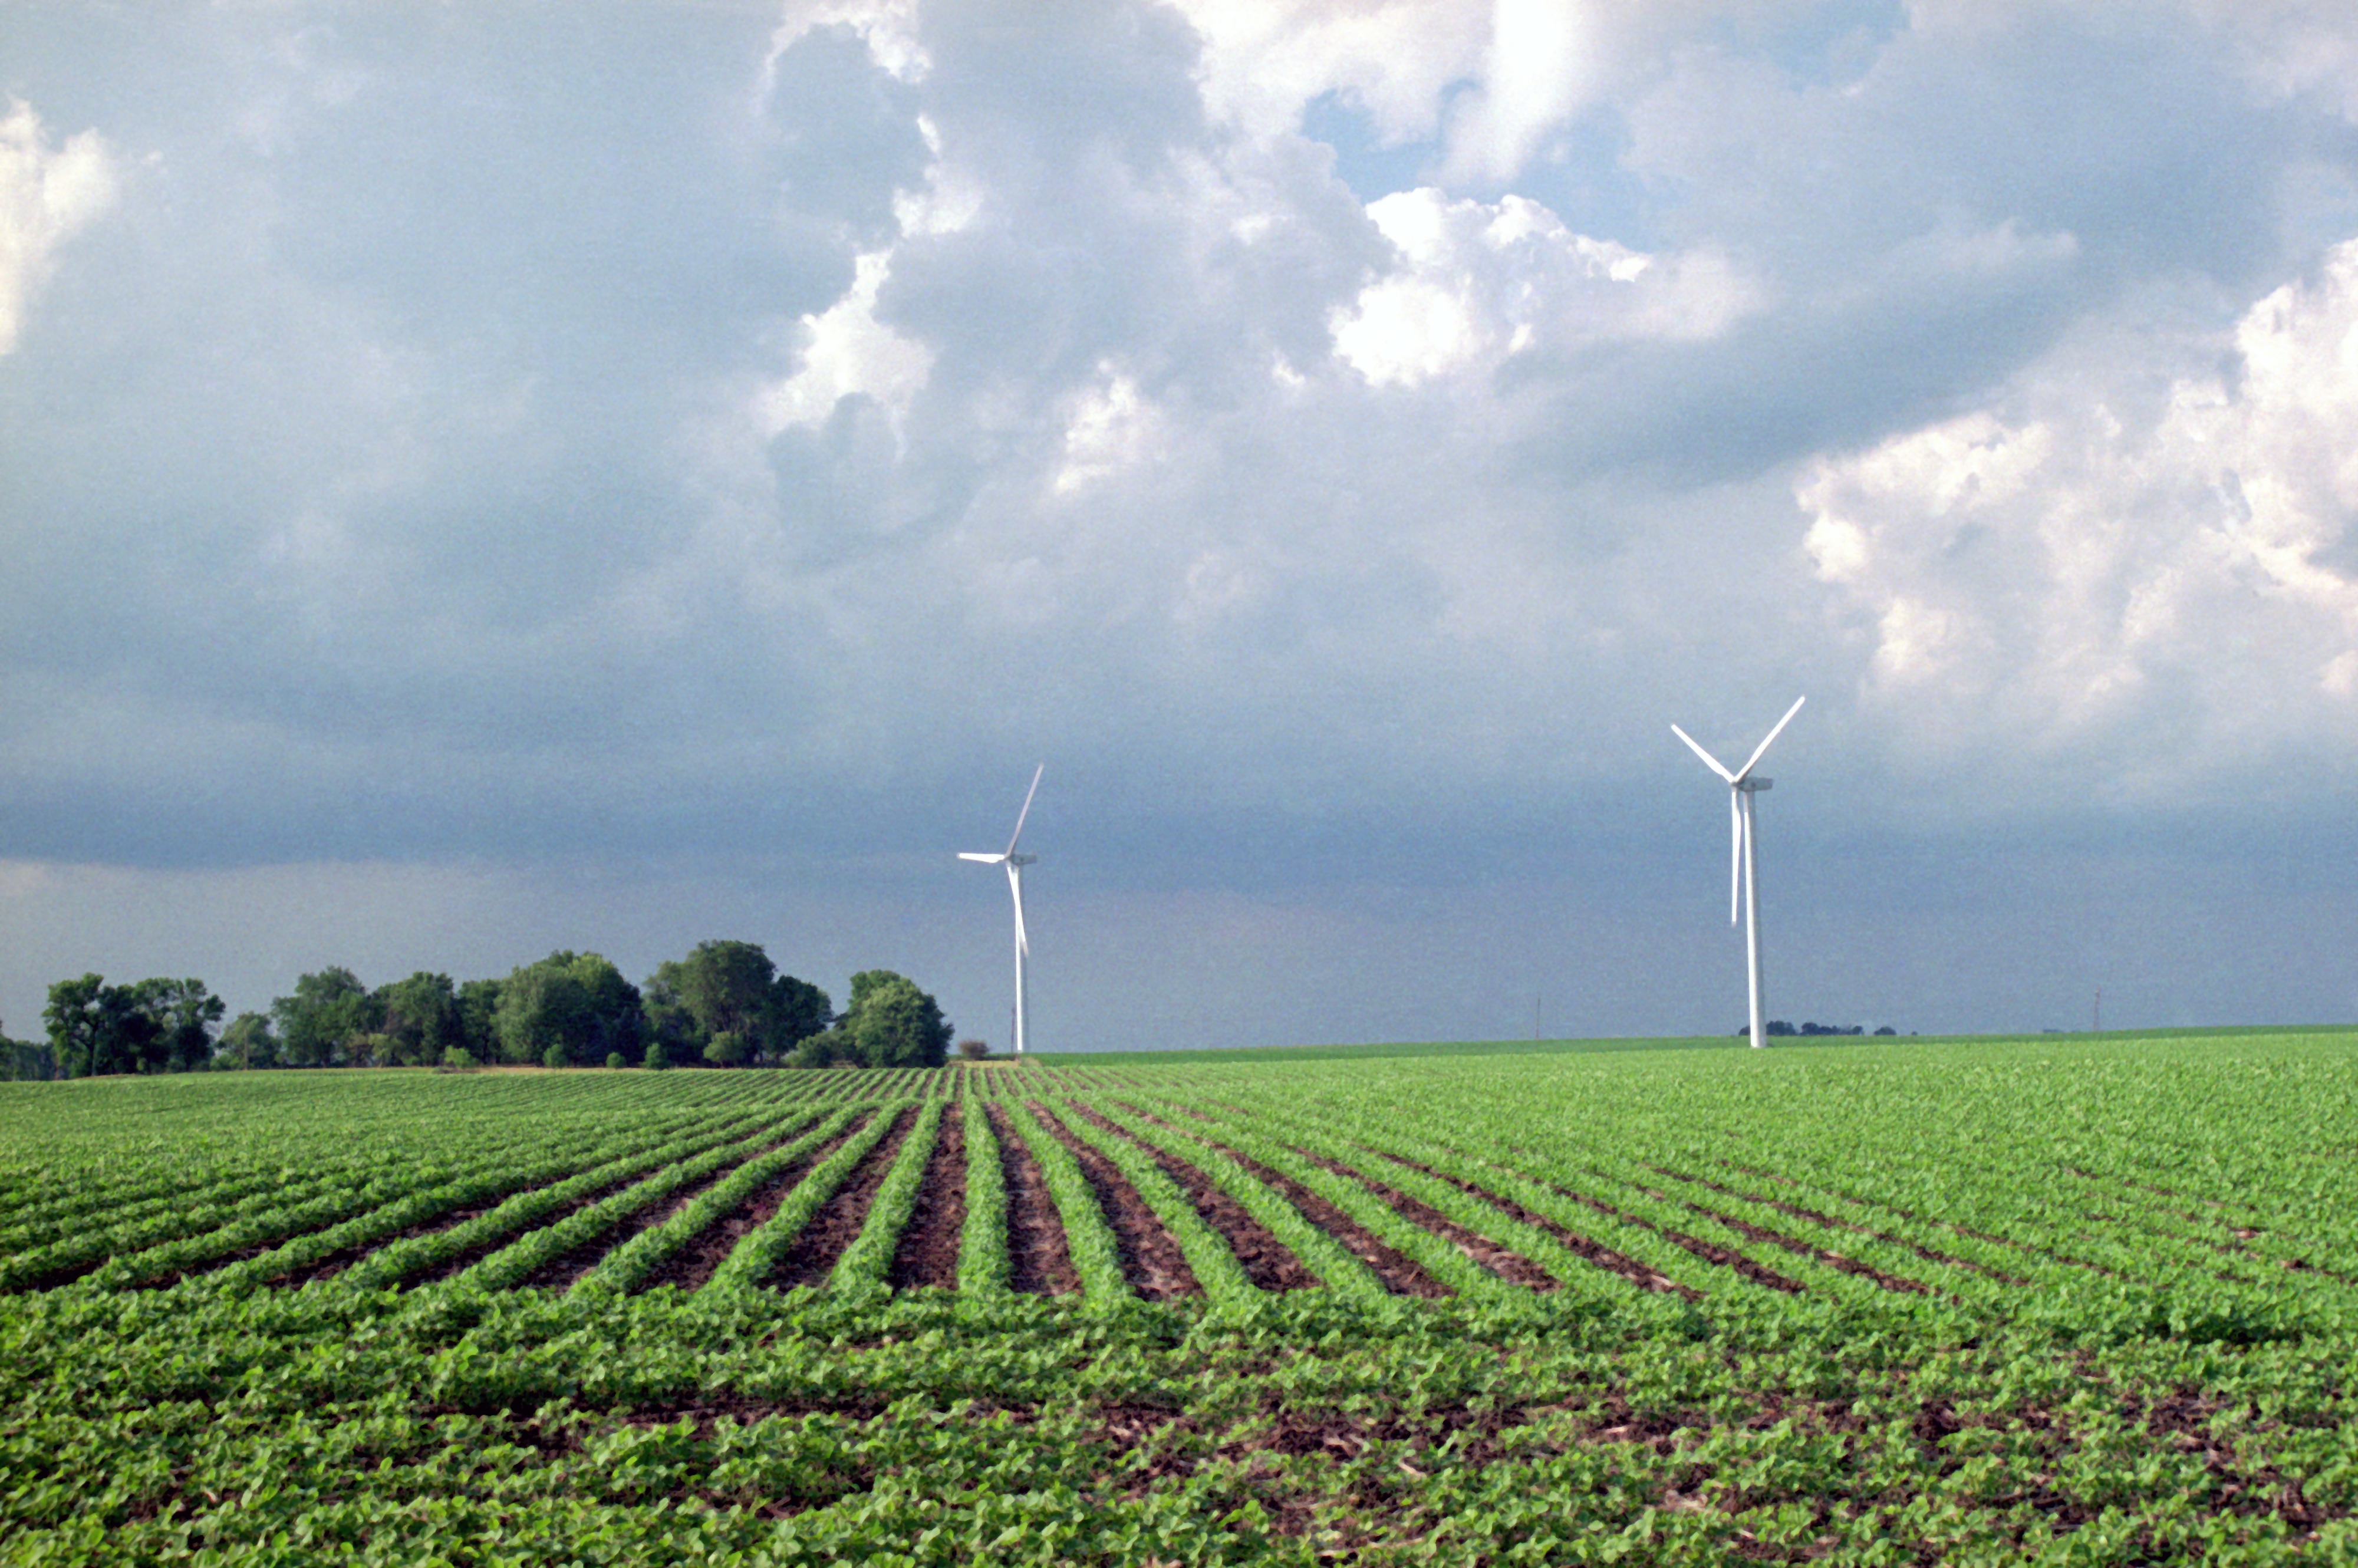 Midamerican Iowa wind farm (Todd Spink, NREL, 2006)